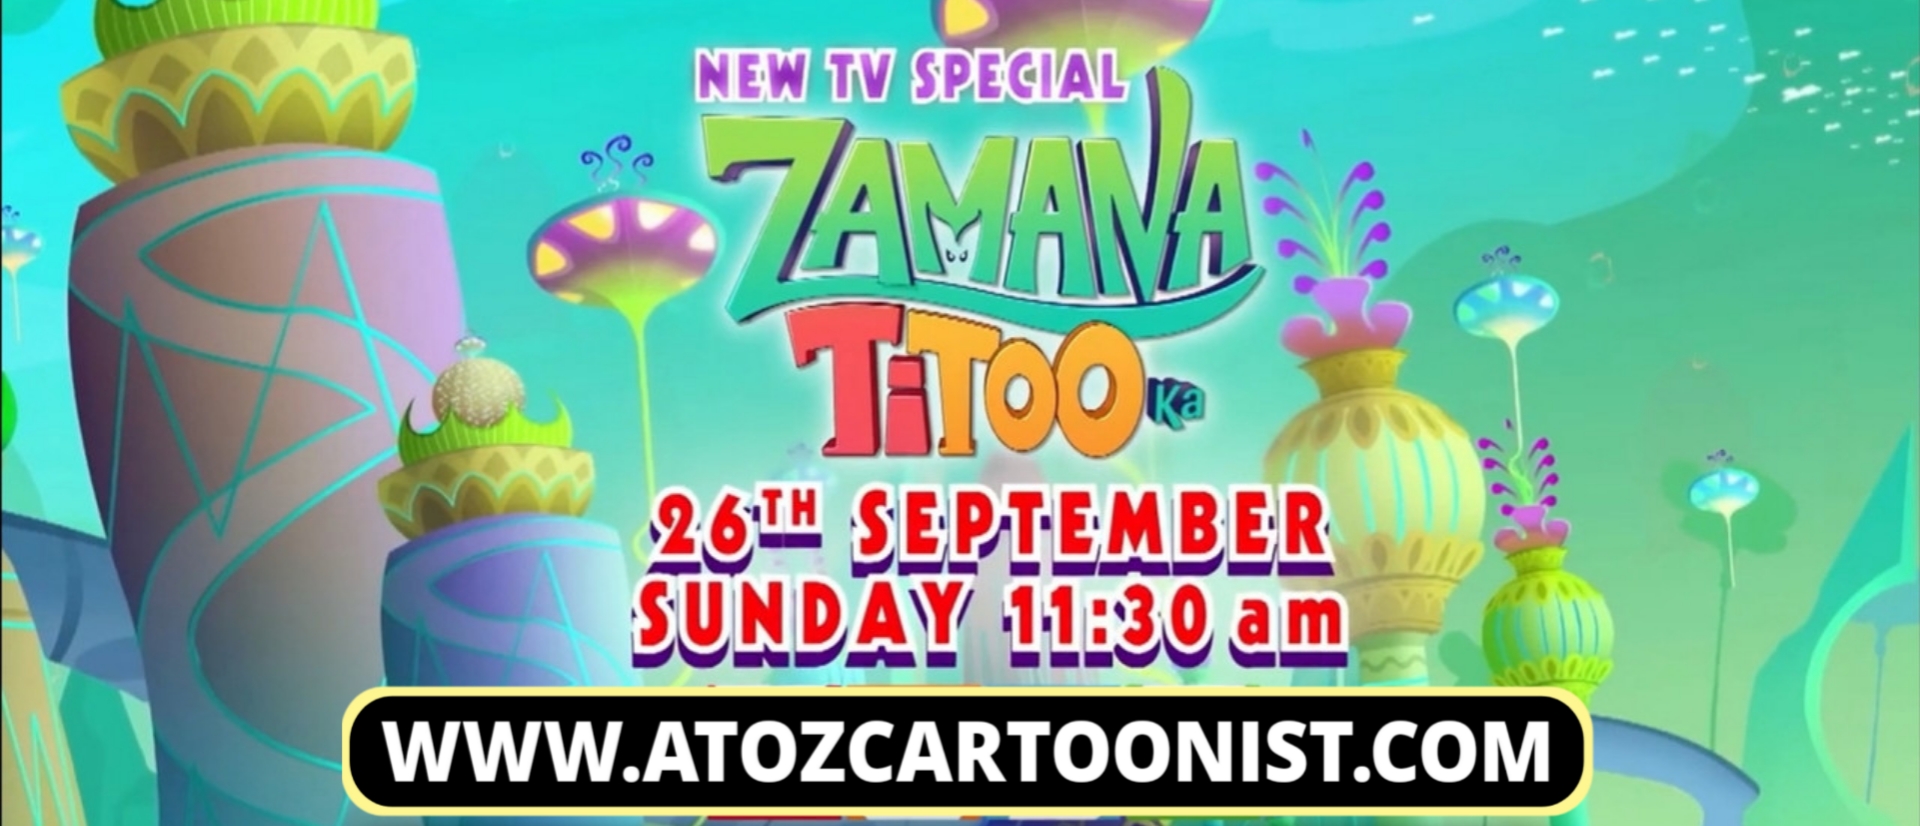 TITOO THE MOVIE : ZAMANA TITOO KA FULL MOVIE IN HINDI DOWNLOAD (720P HDTVRIP)